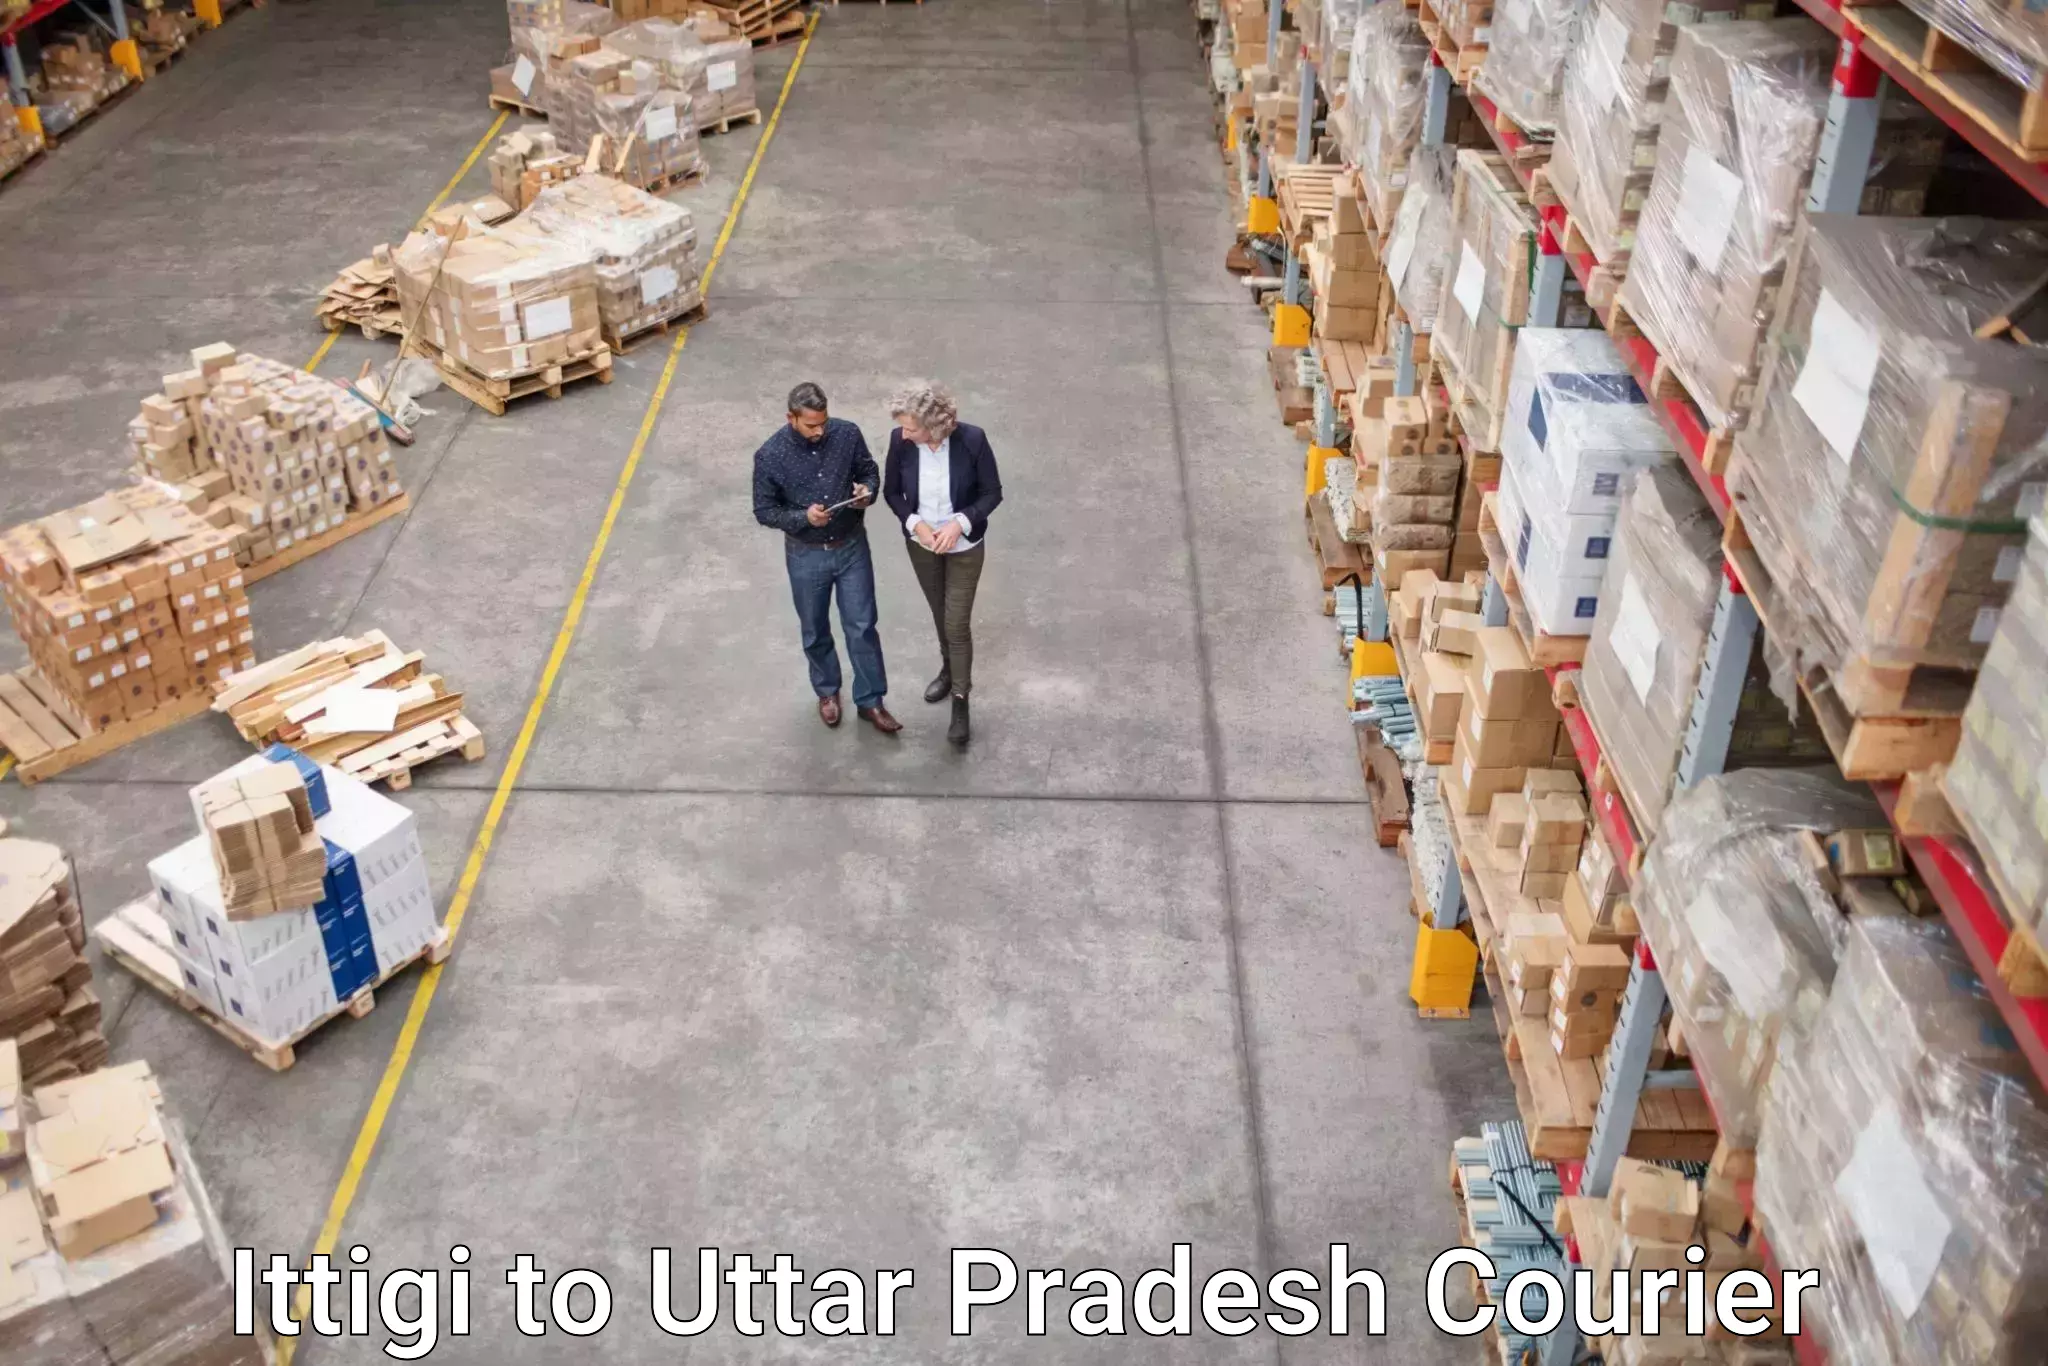 Comprehensive logistics Ittigi to Allahabad